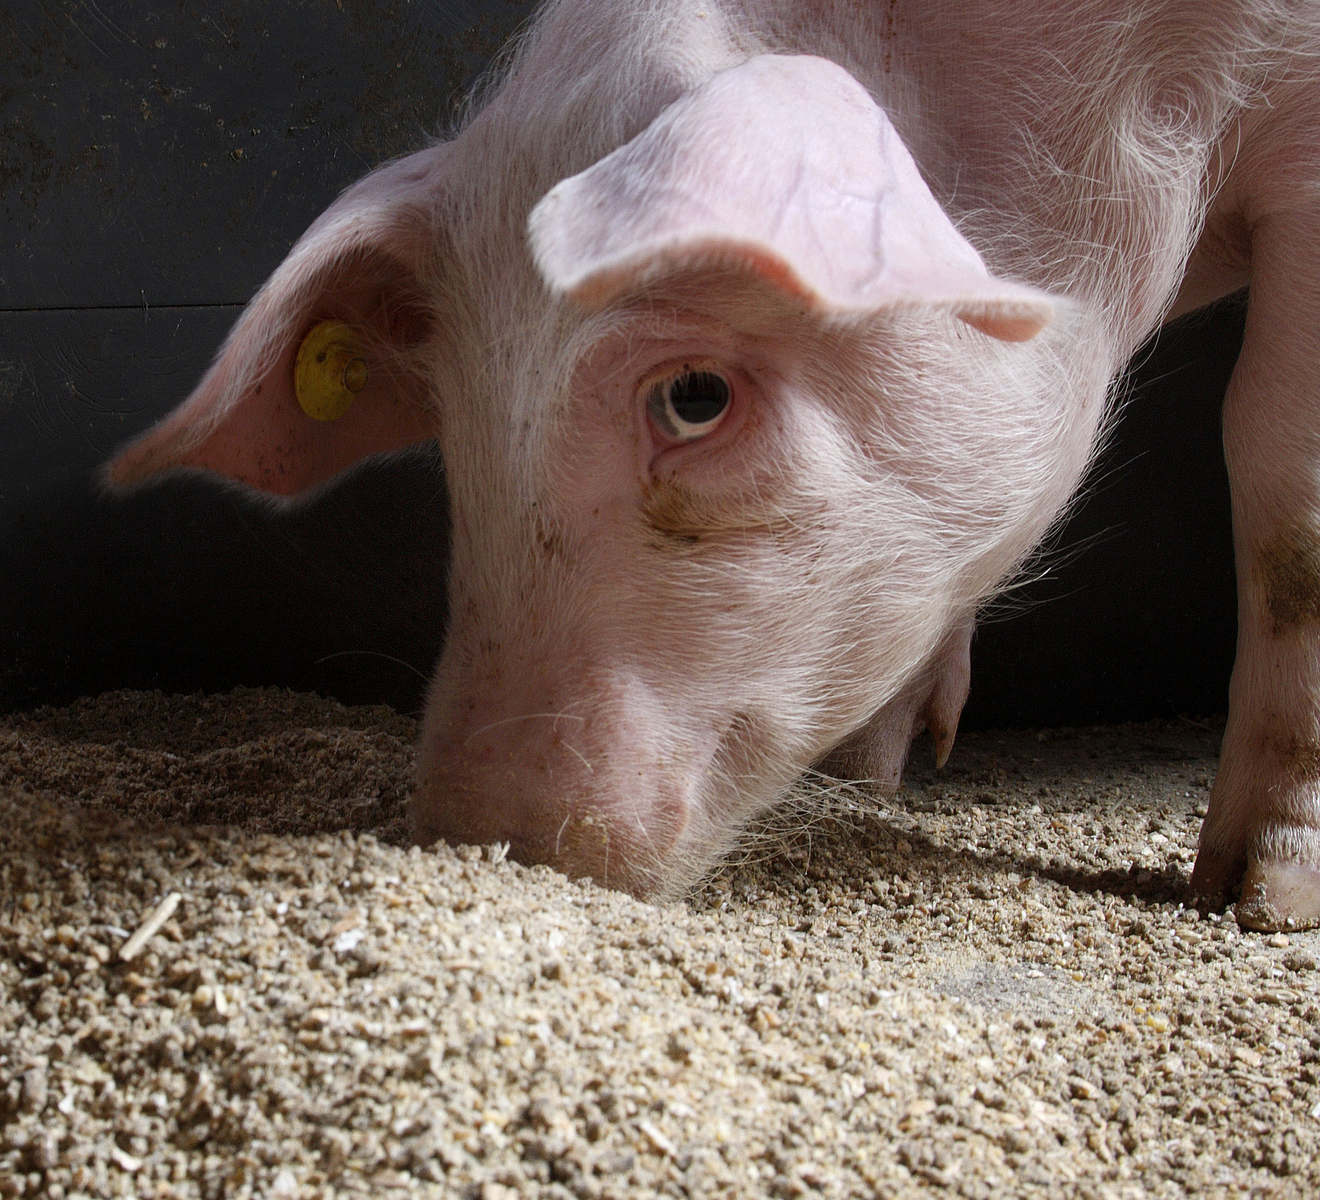 Improving nutrient digestibility, gut health in swine